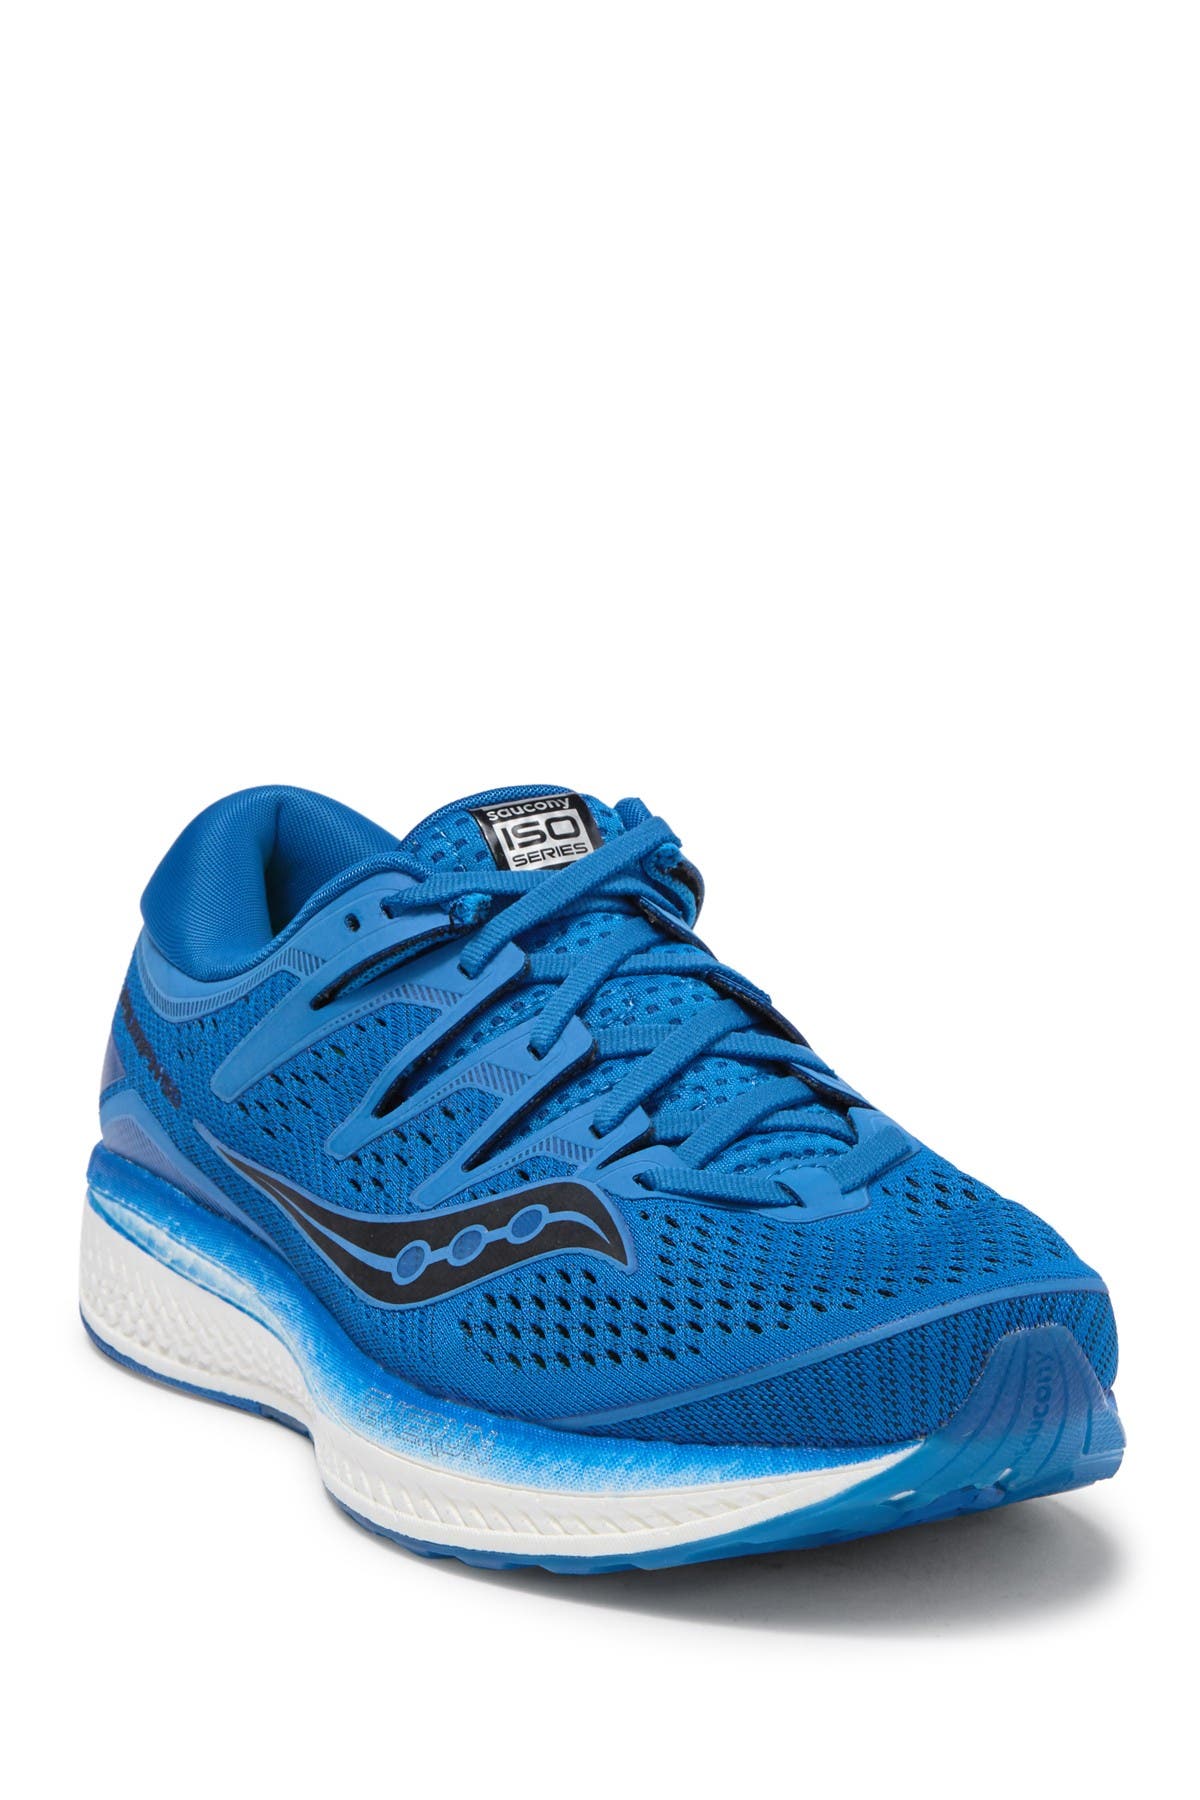 Saucony | Triumph ISO 5 Running Shoe 